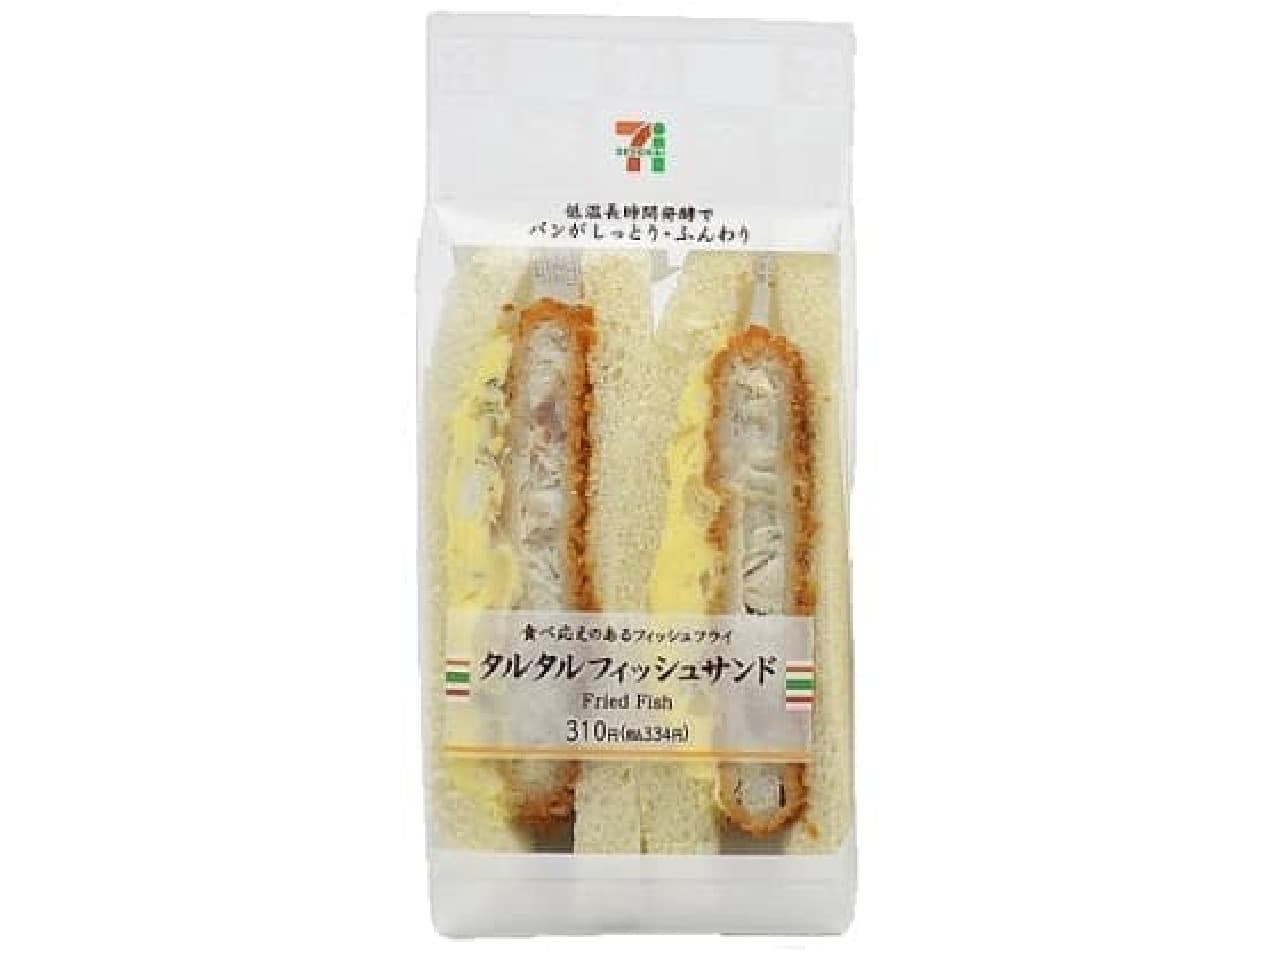 7-ELEVEN "Tartar Fish Sandwich"